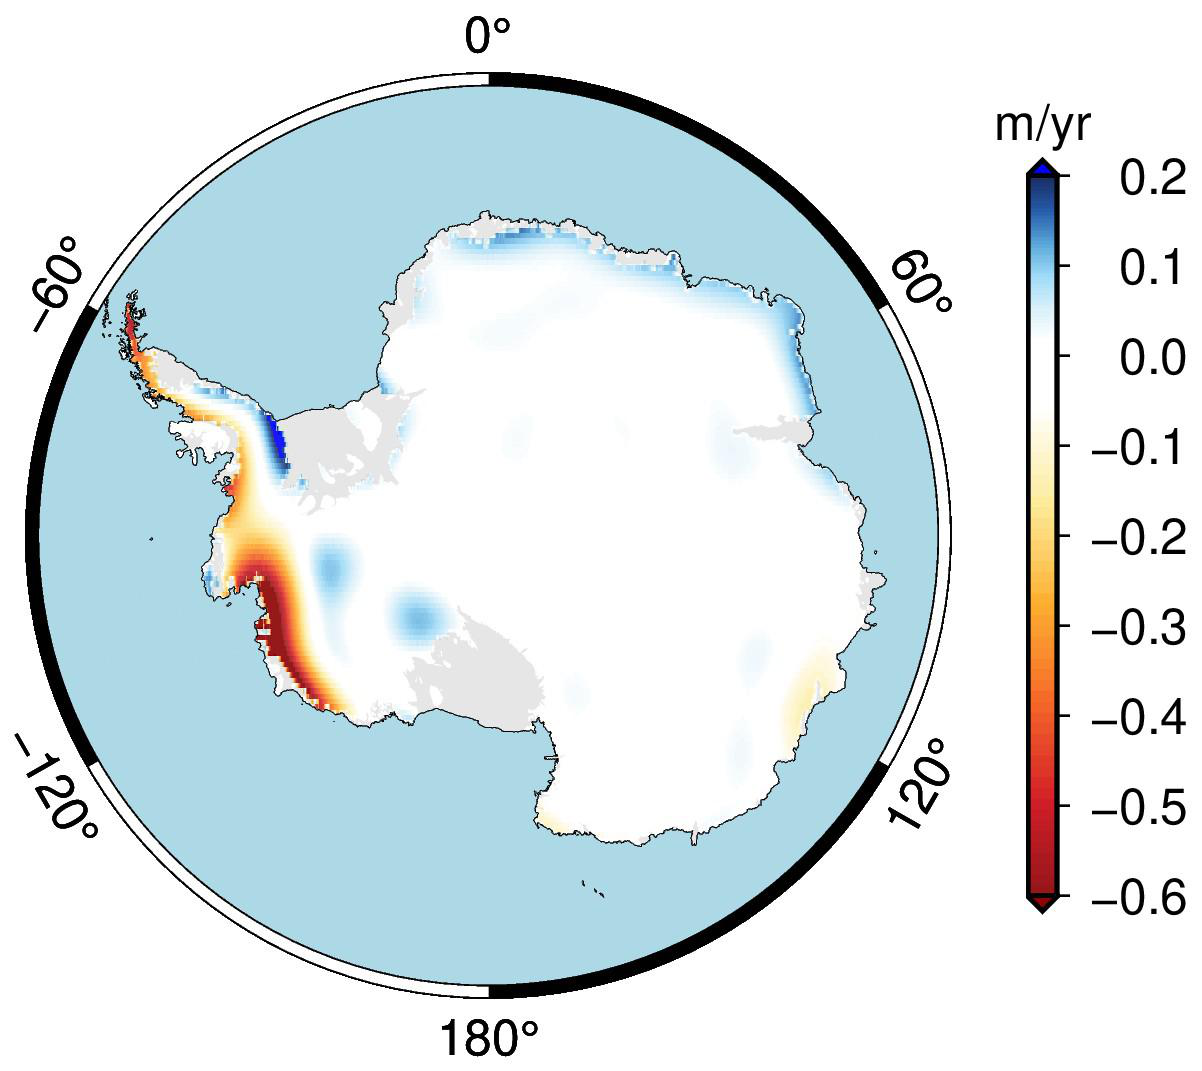 Antarctica Ice Sheet Mass Changes from Satellite Gravimetry (2002-2019)